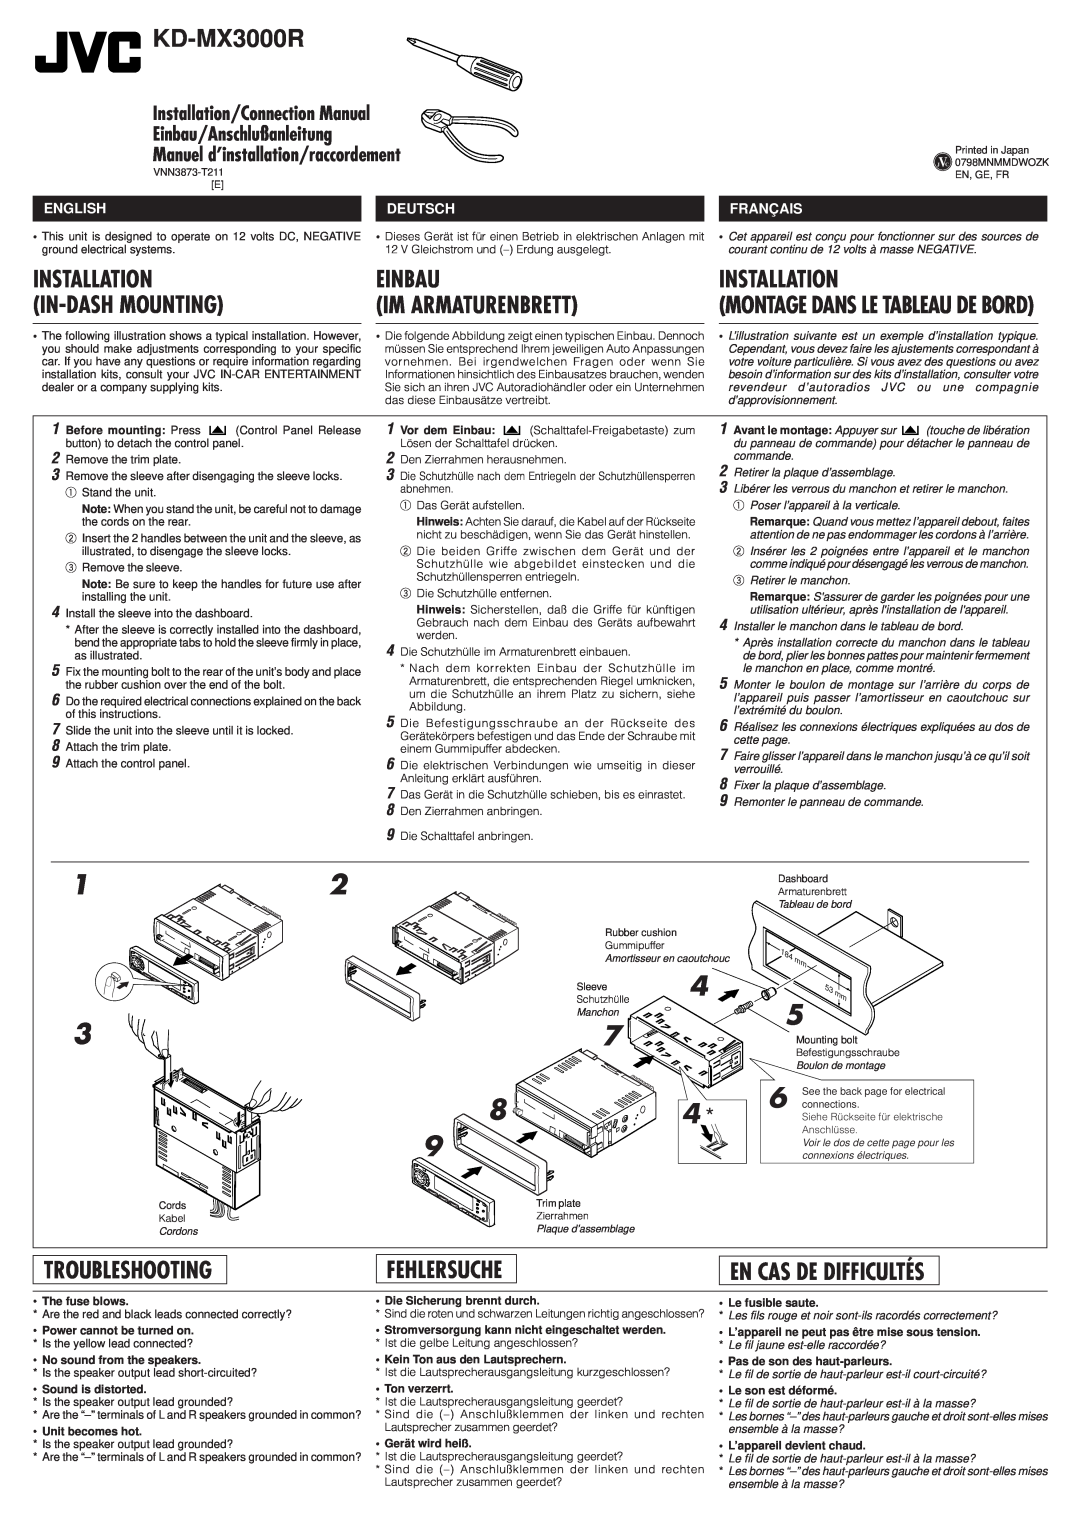 JVC KD-MX3000R manual Einbau Im Armaturenbrett, Installation, Troubleshooting, Fehlersuche, En Cas De Difficultés 